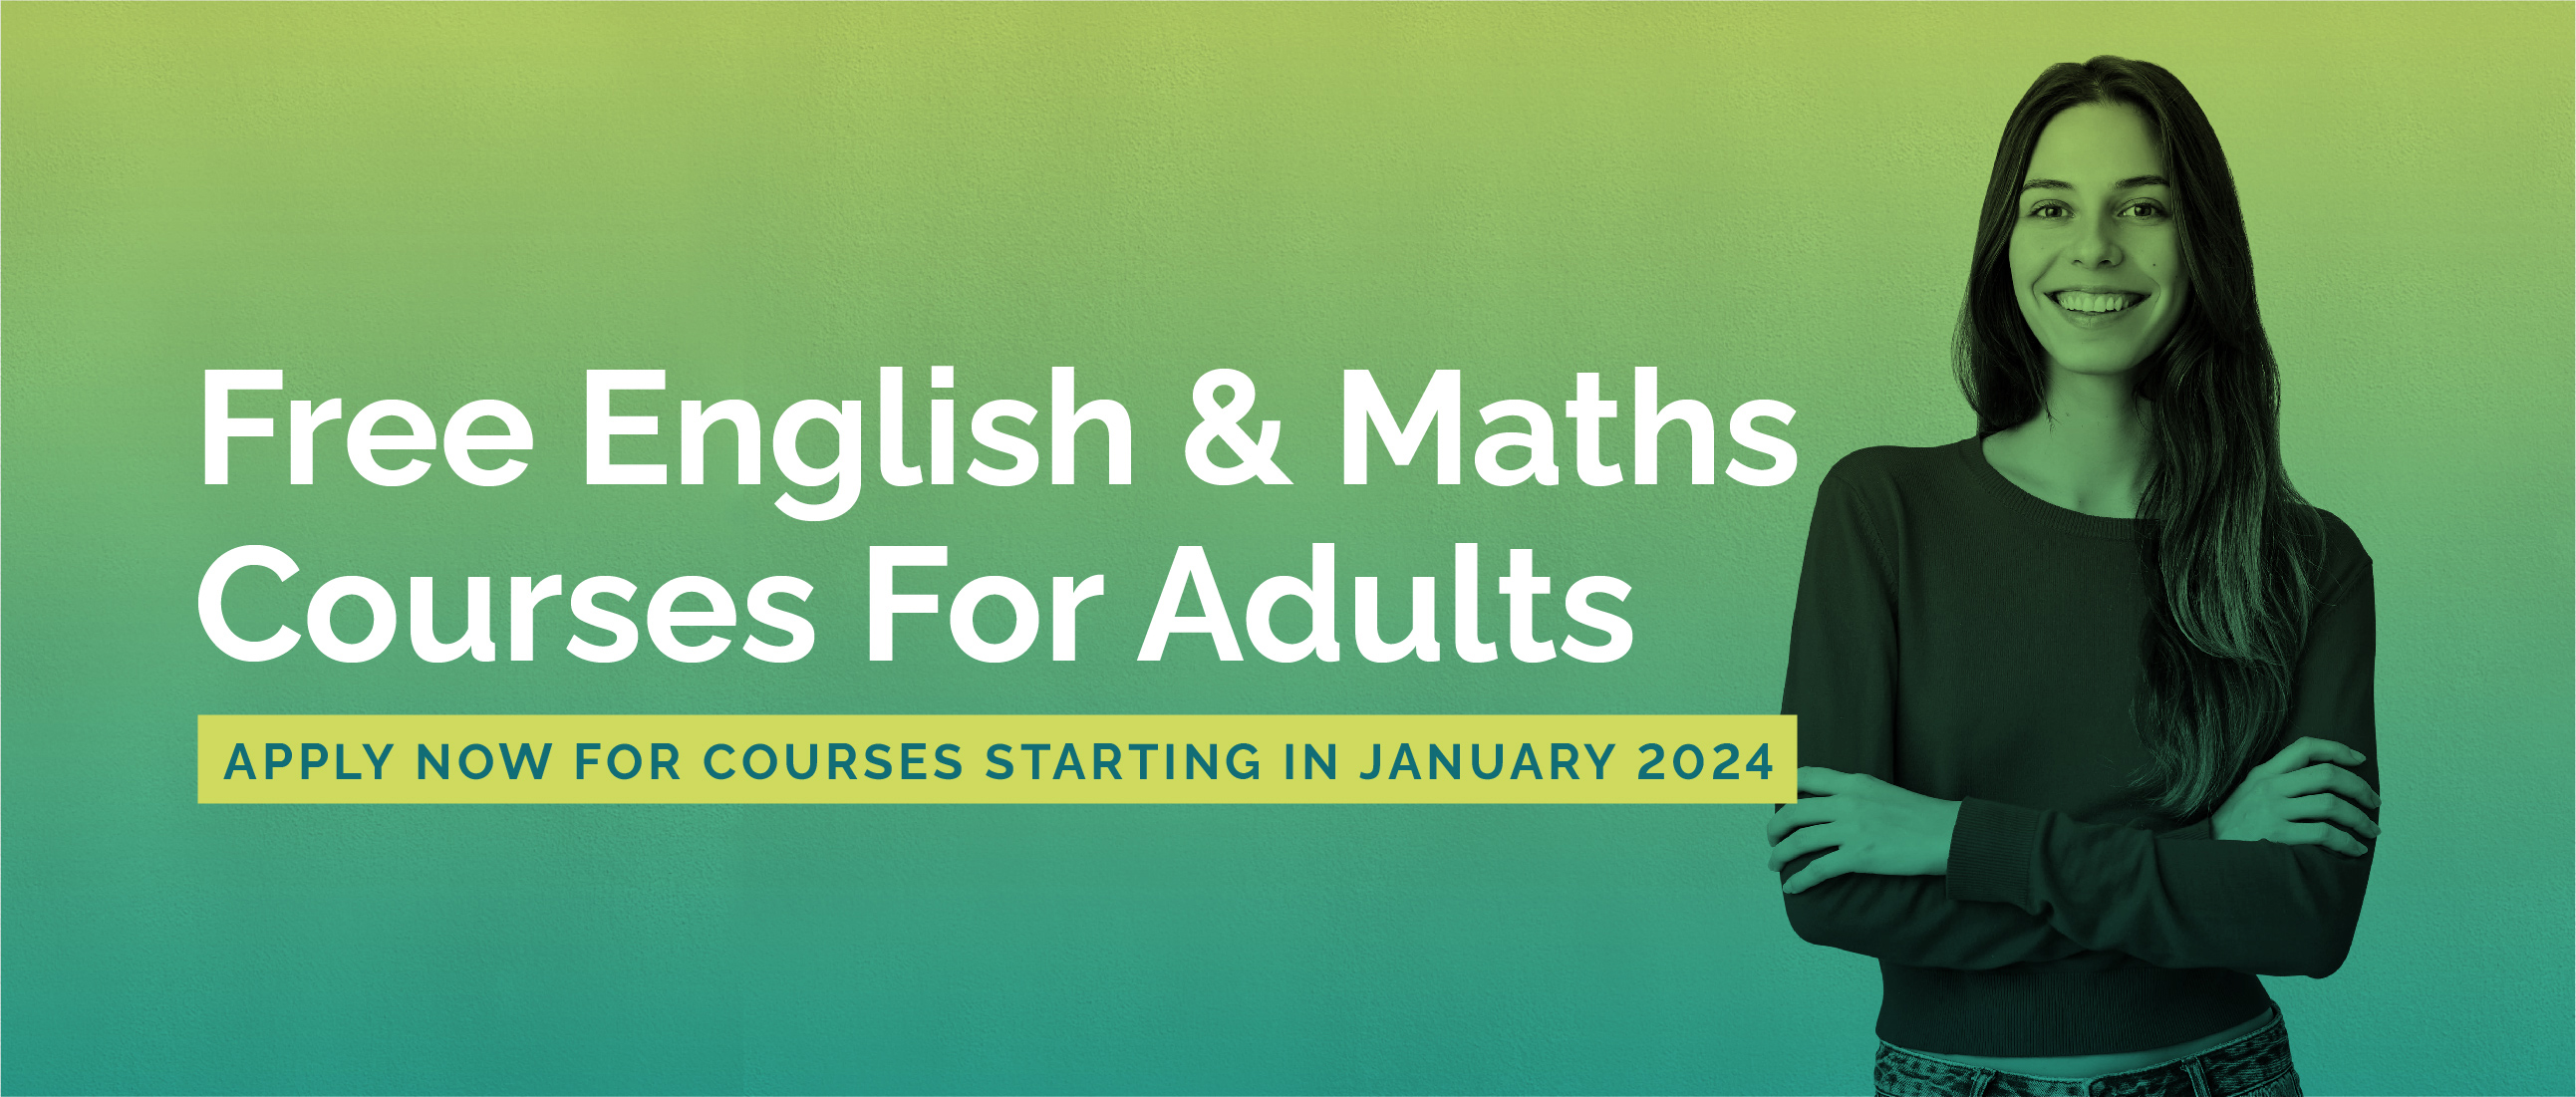 English maths web banner Nov 2023 Artboard 01